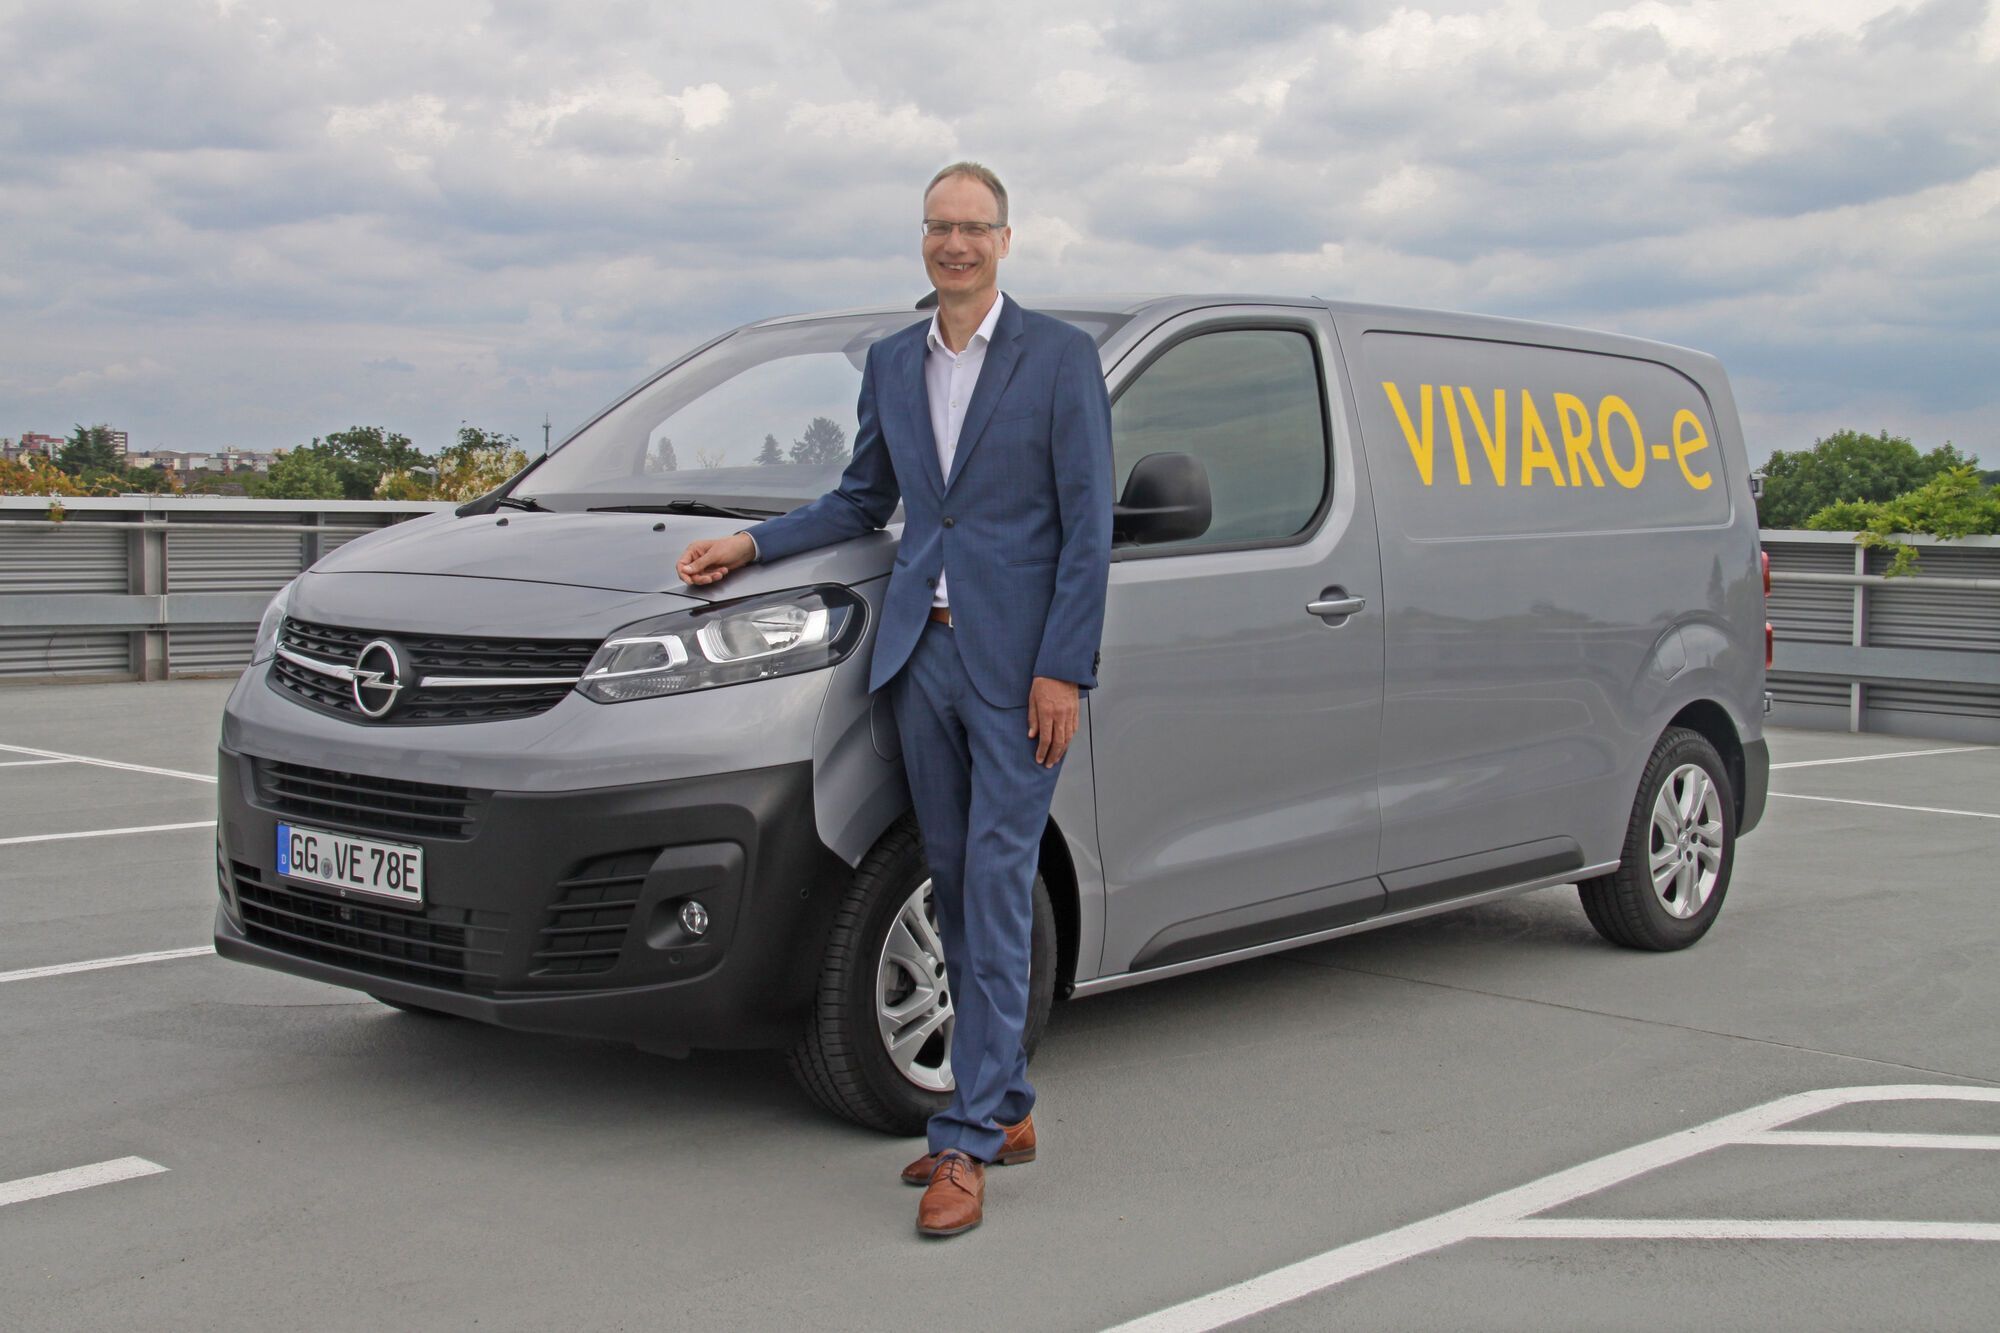 Керівник Opel Міхаель Лошеллер у нового електричного фургона Opel Vivaro-e. фото: